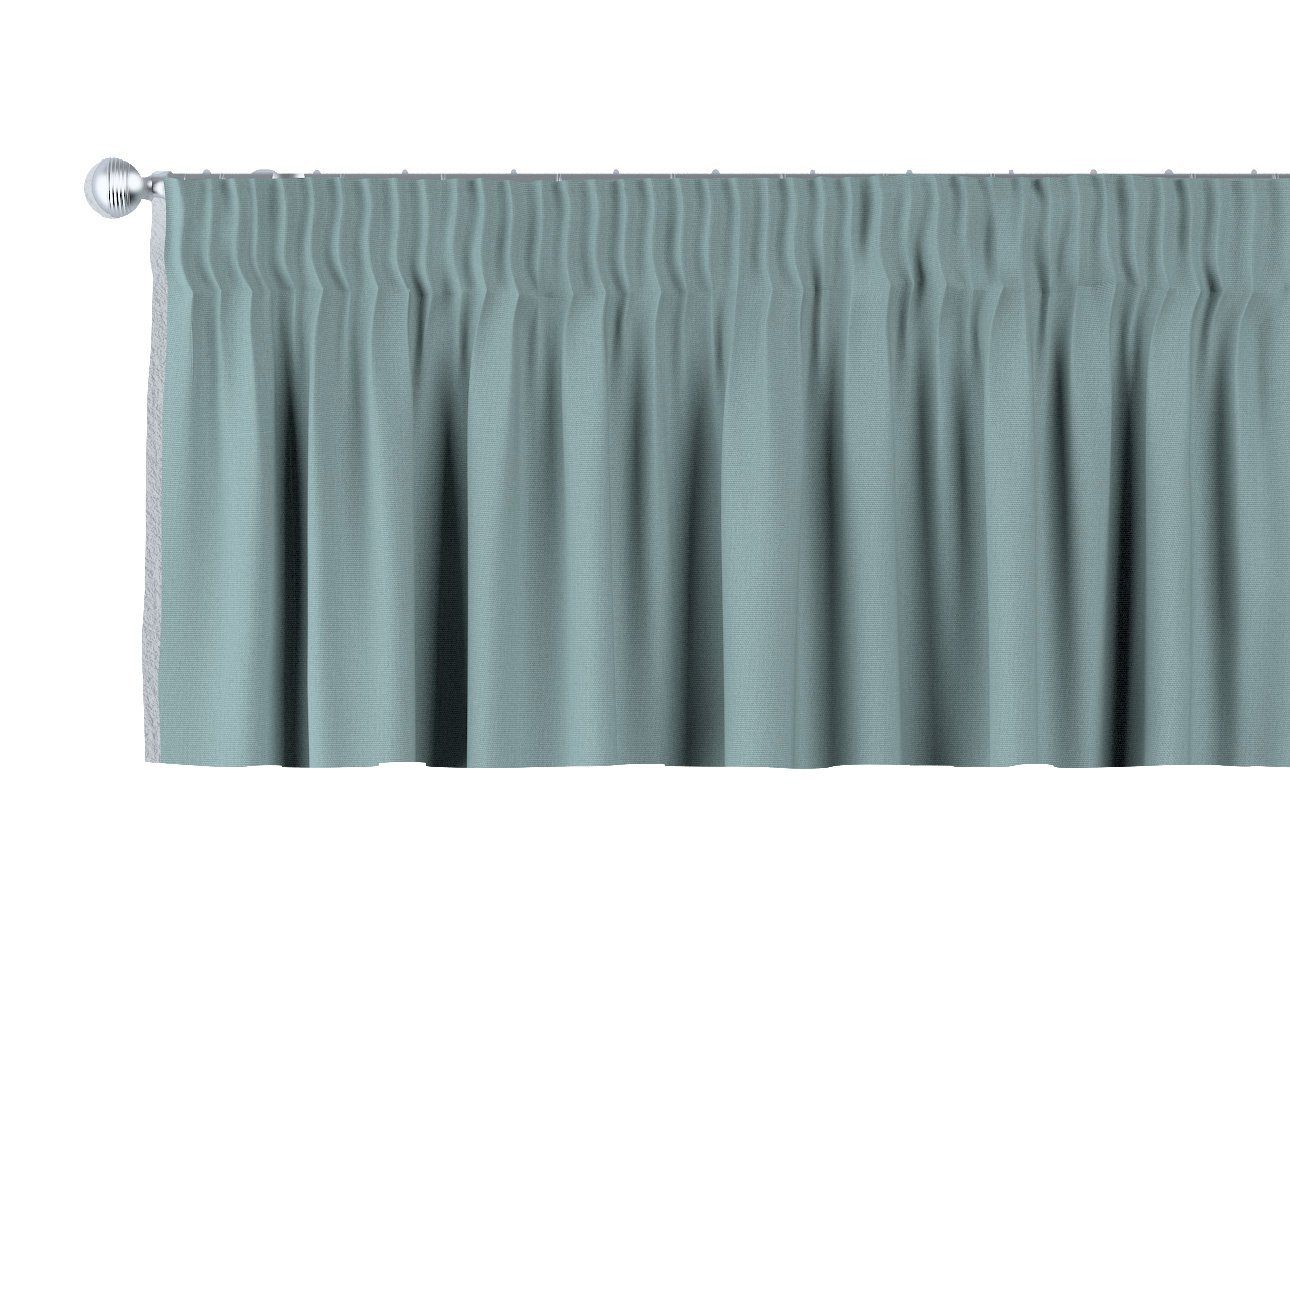 Vorhang mit Kräuselband 130 x 40 cm, Cotton Panama, Dekoria eucalyptus grün | Fertiggardinen